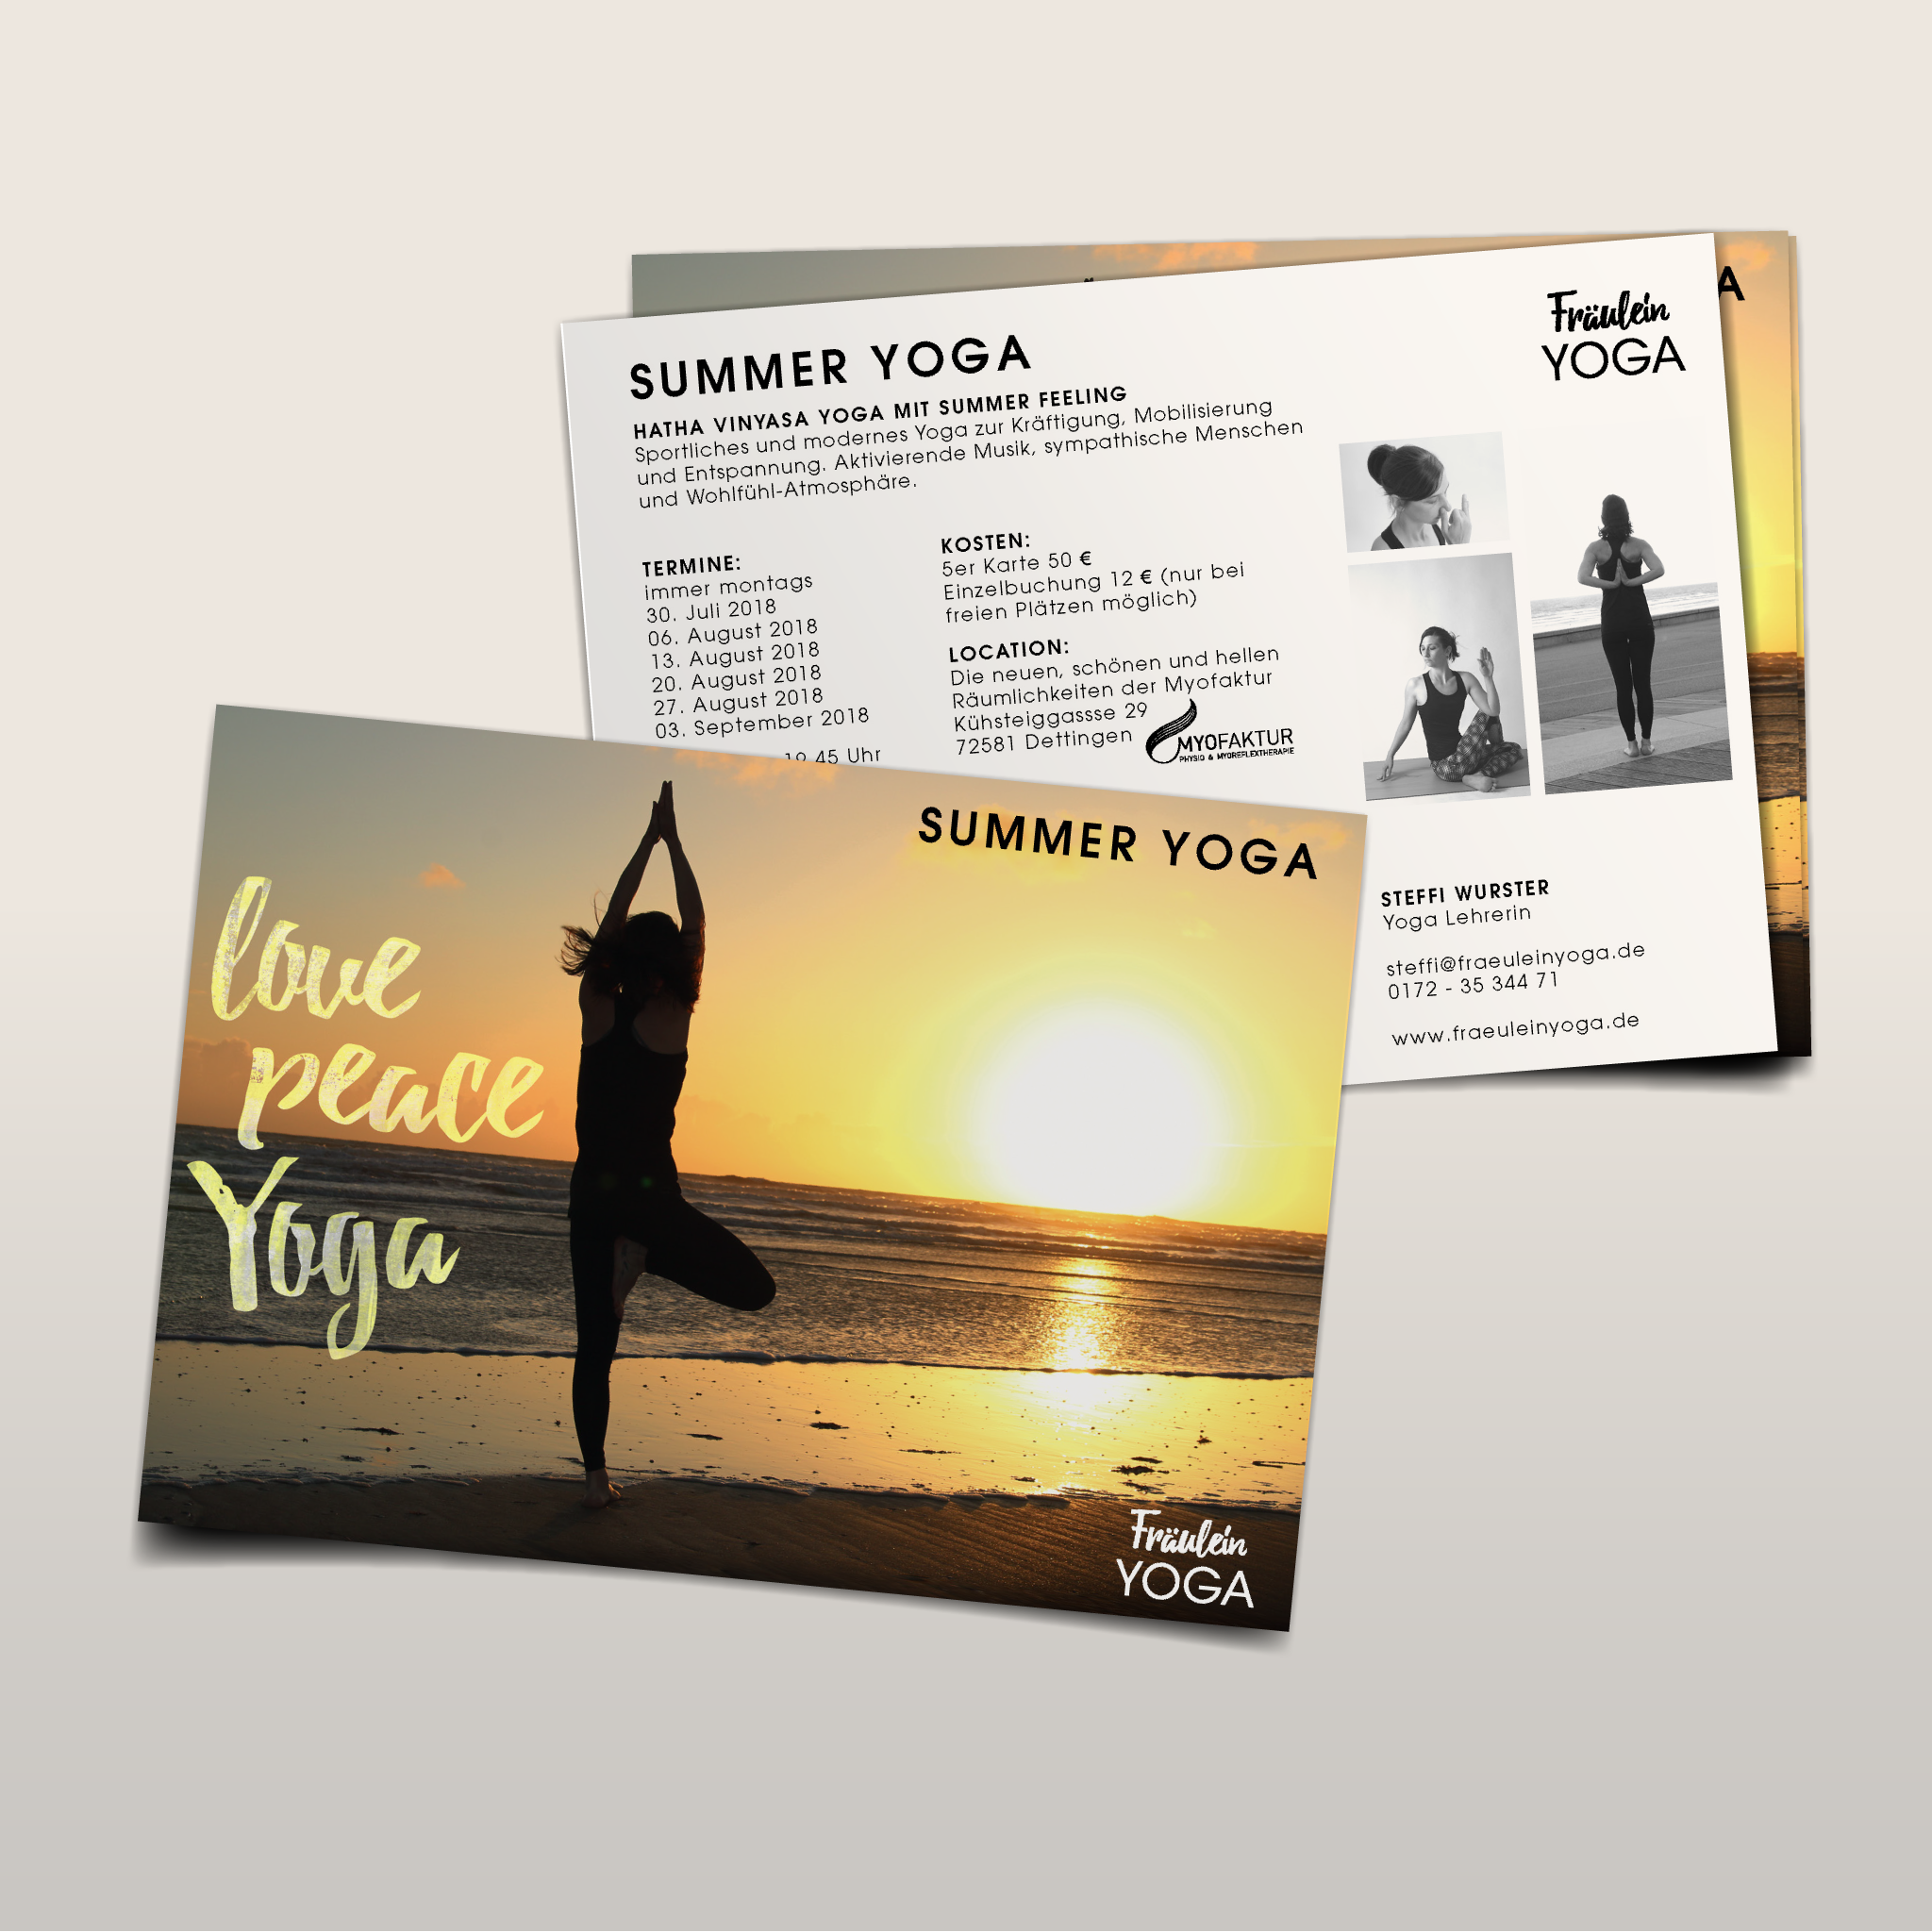 Flyer Gestaltung Fraeulein Yoga "love peace yoga" Summer Yoga